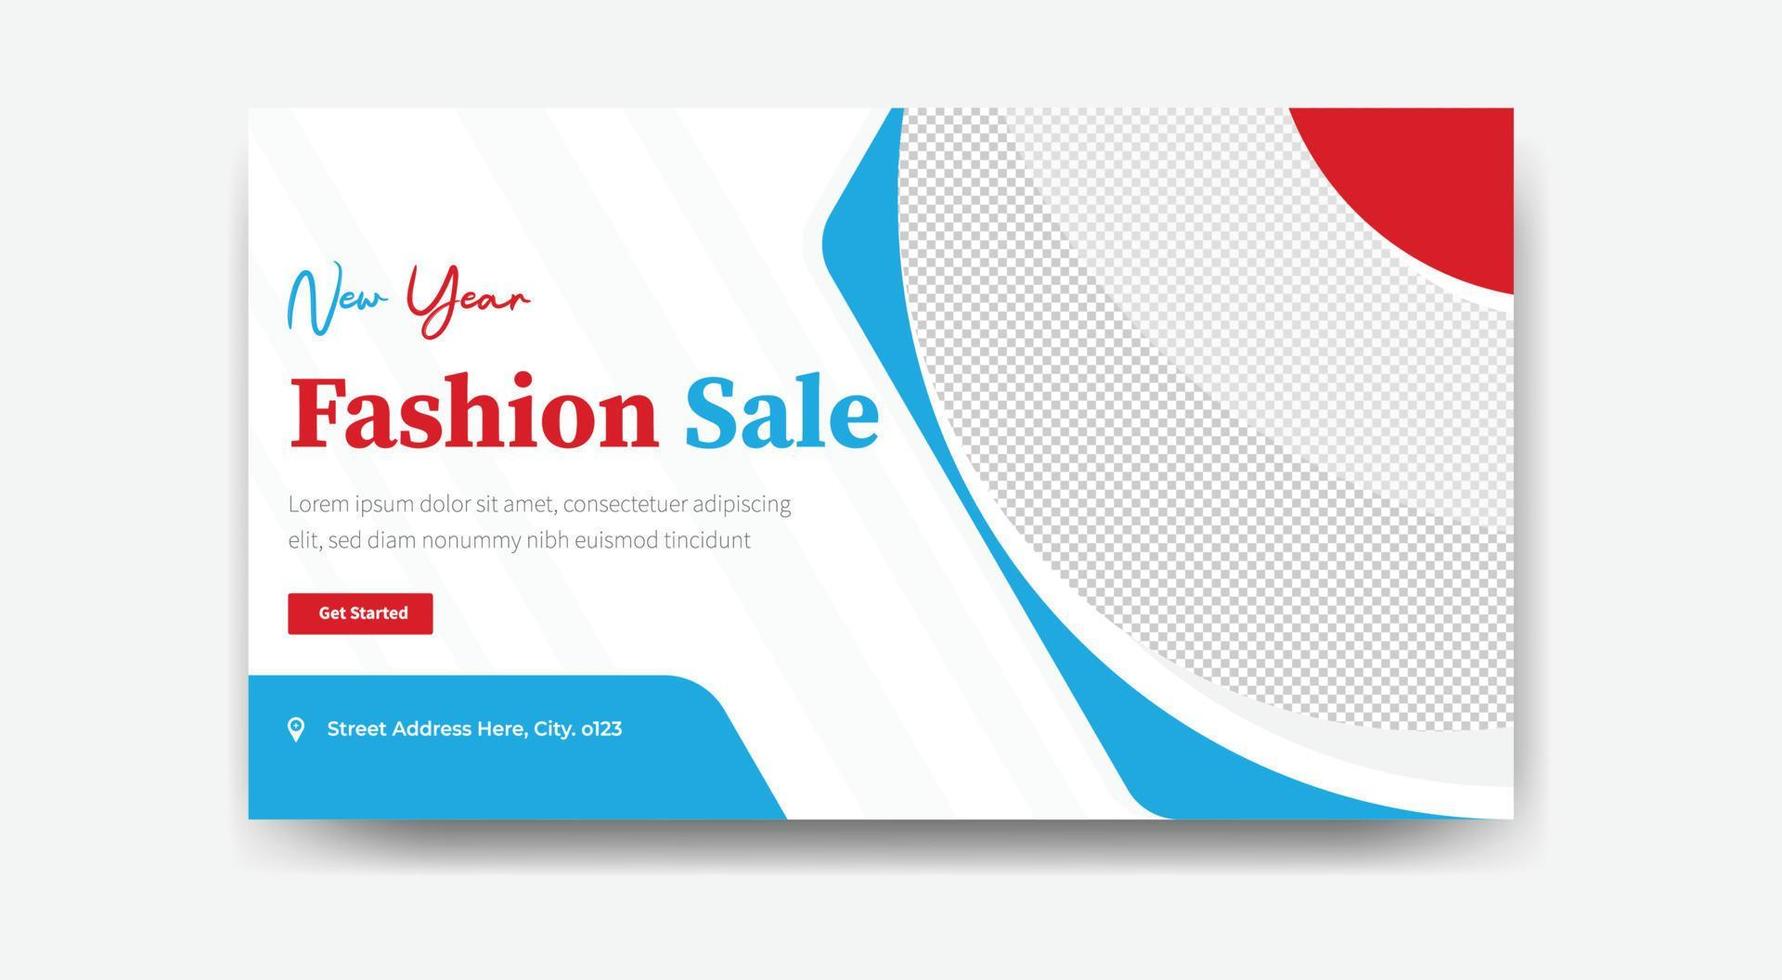 new year fashion sale thumbnail design free vector